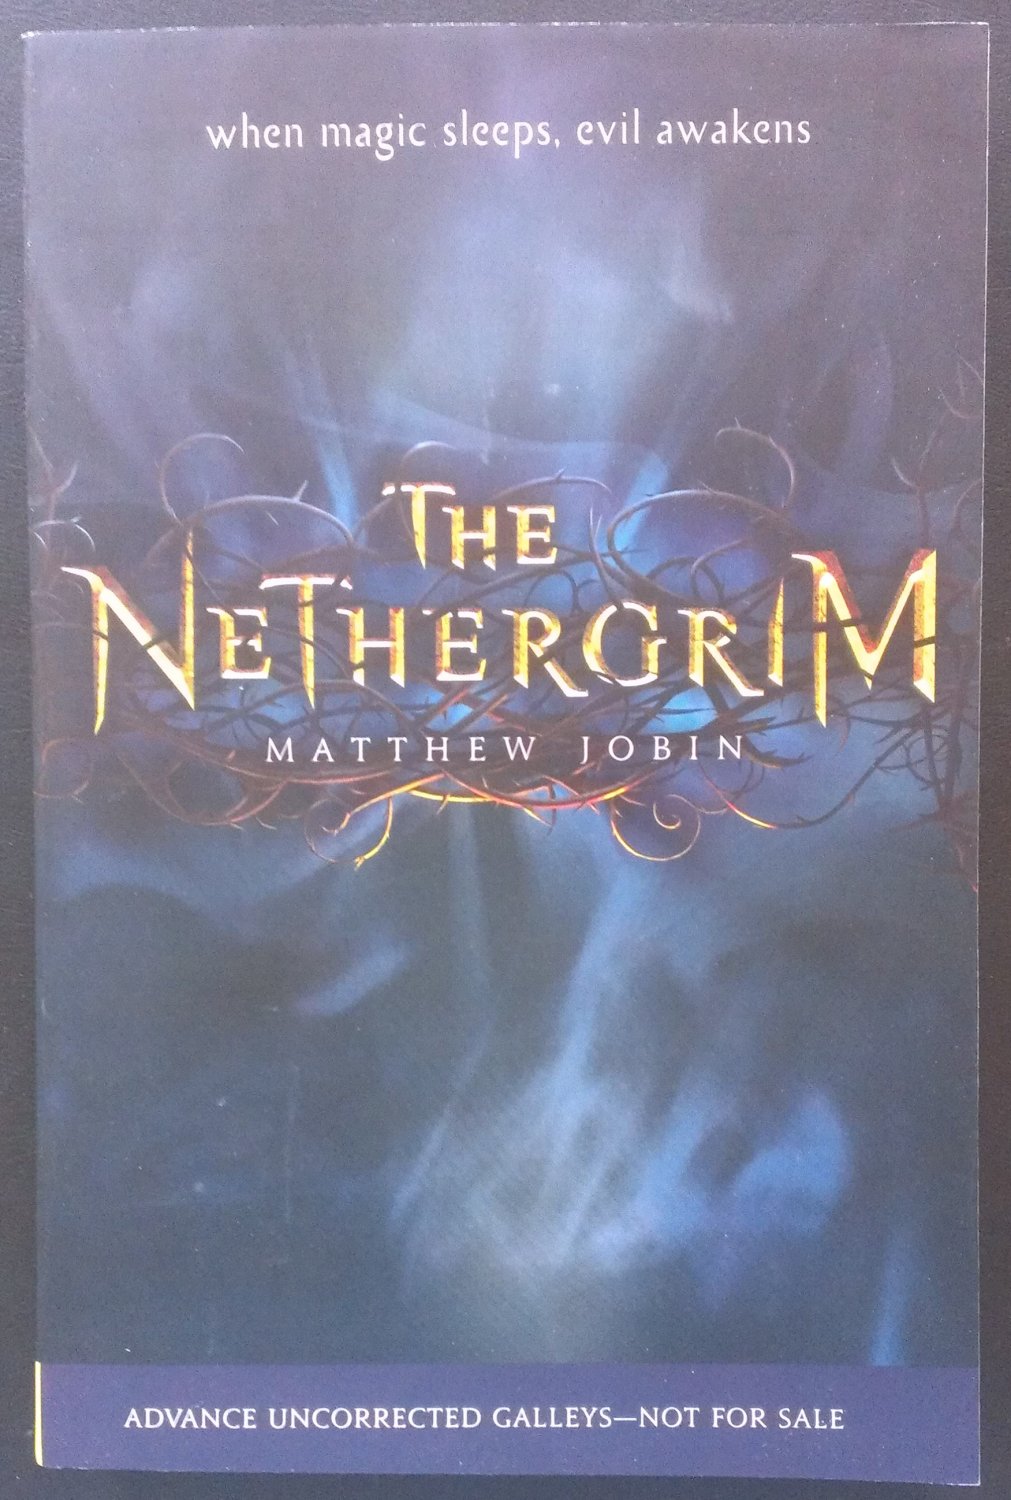 the nethergrim book 3